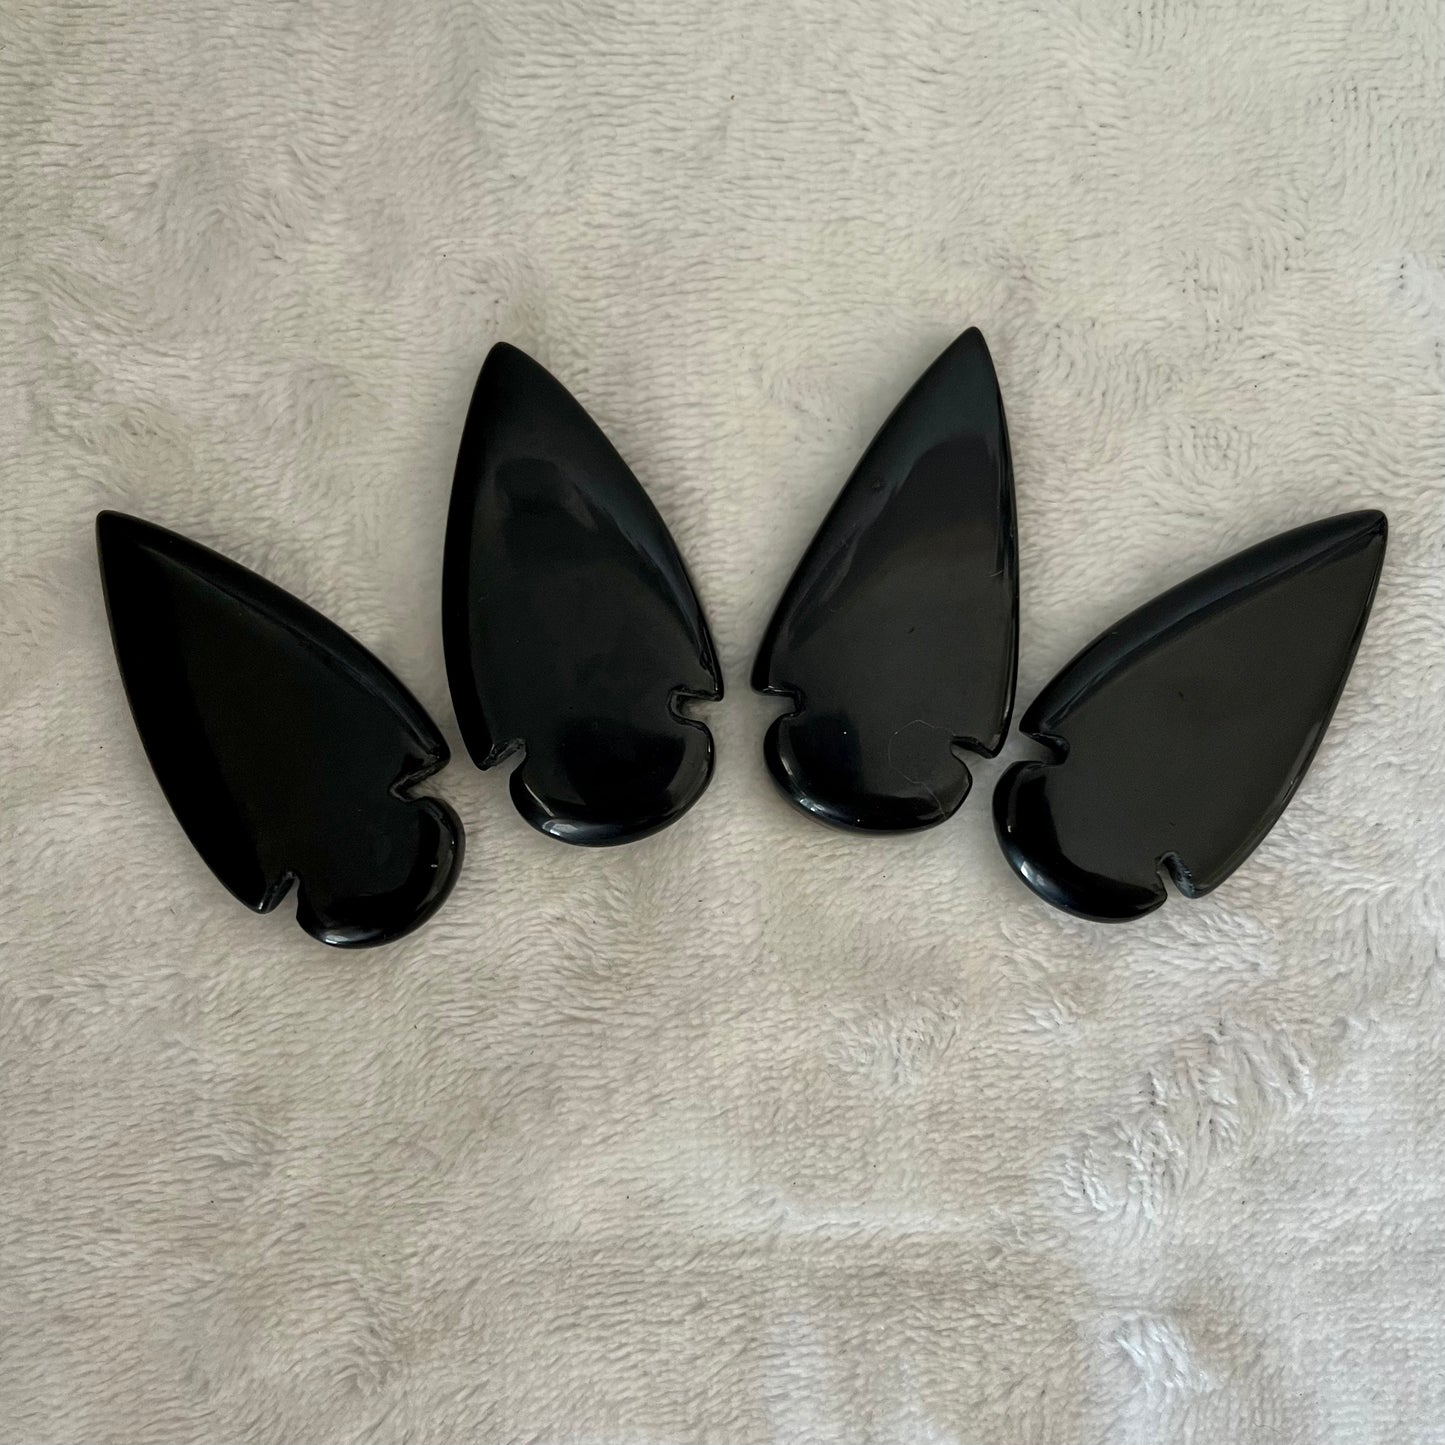 Black Obsidian Arrowhead Carving (Approx. 2” X 1”) 0220